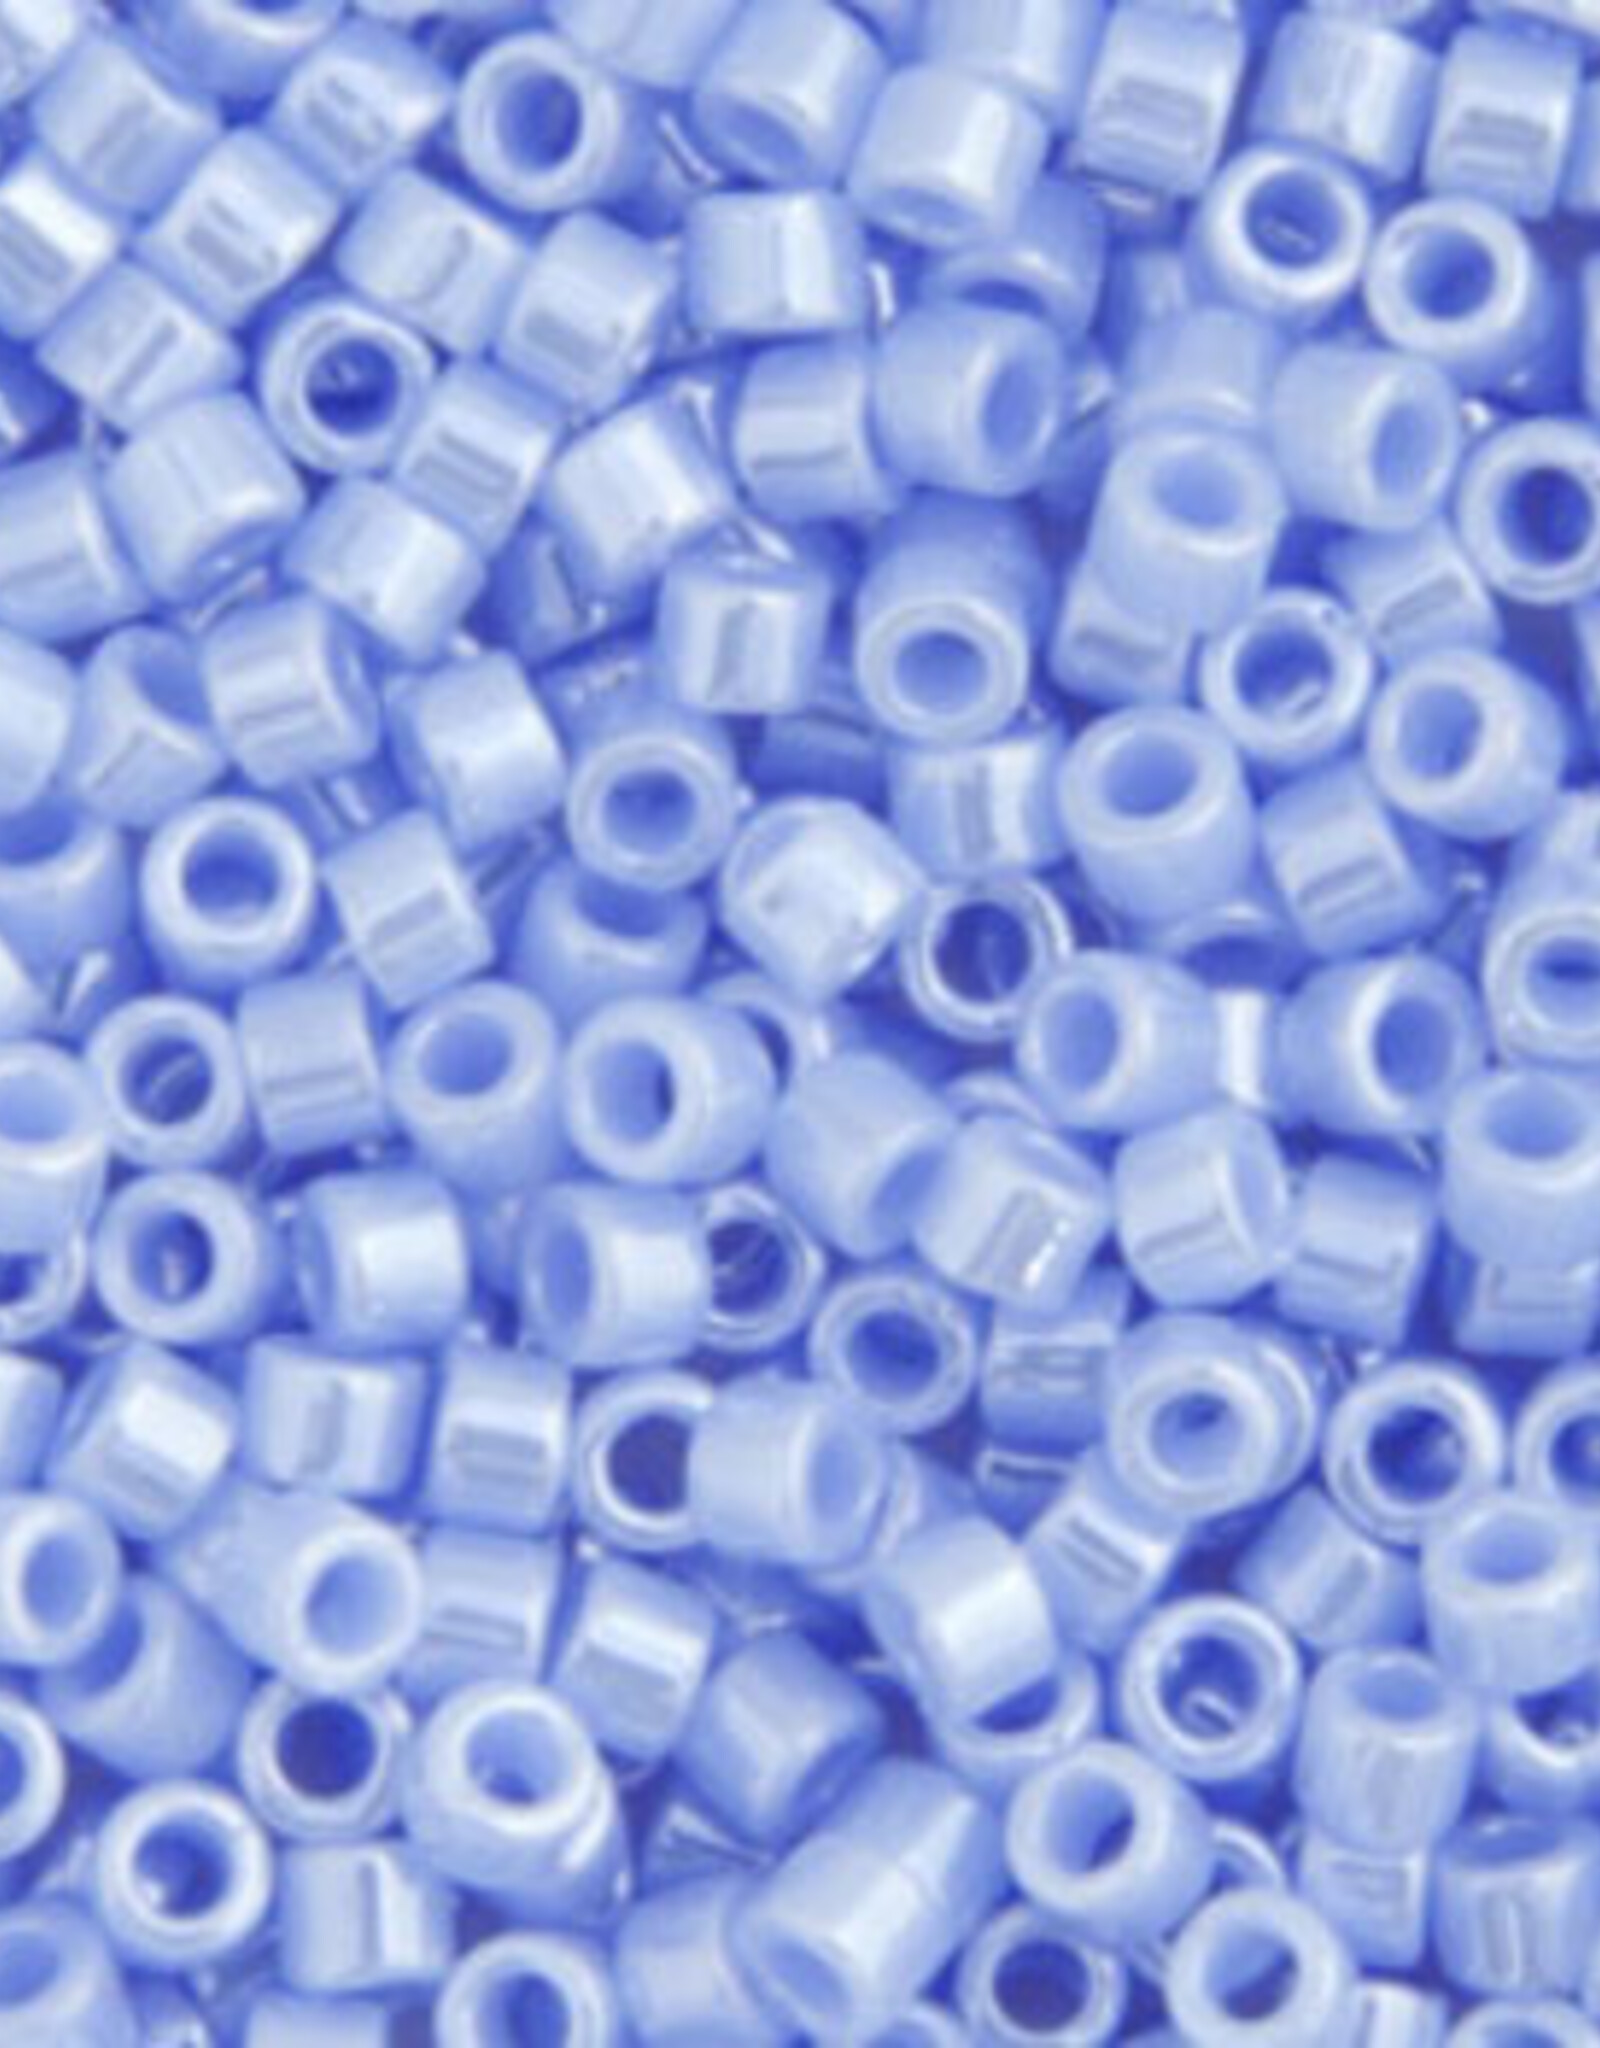 Miyuki Delica Seed Beads Delica Program 11/0 Rd Blue Agate Opaque Luster 1568V